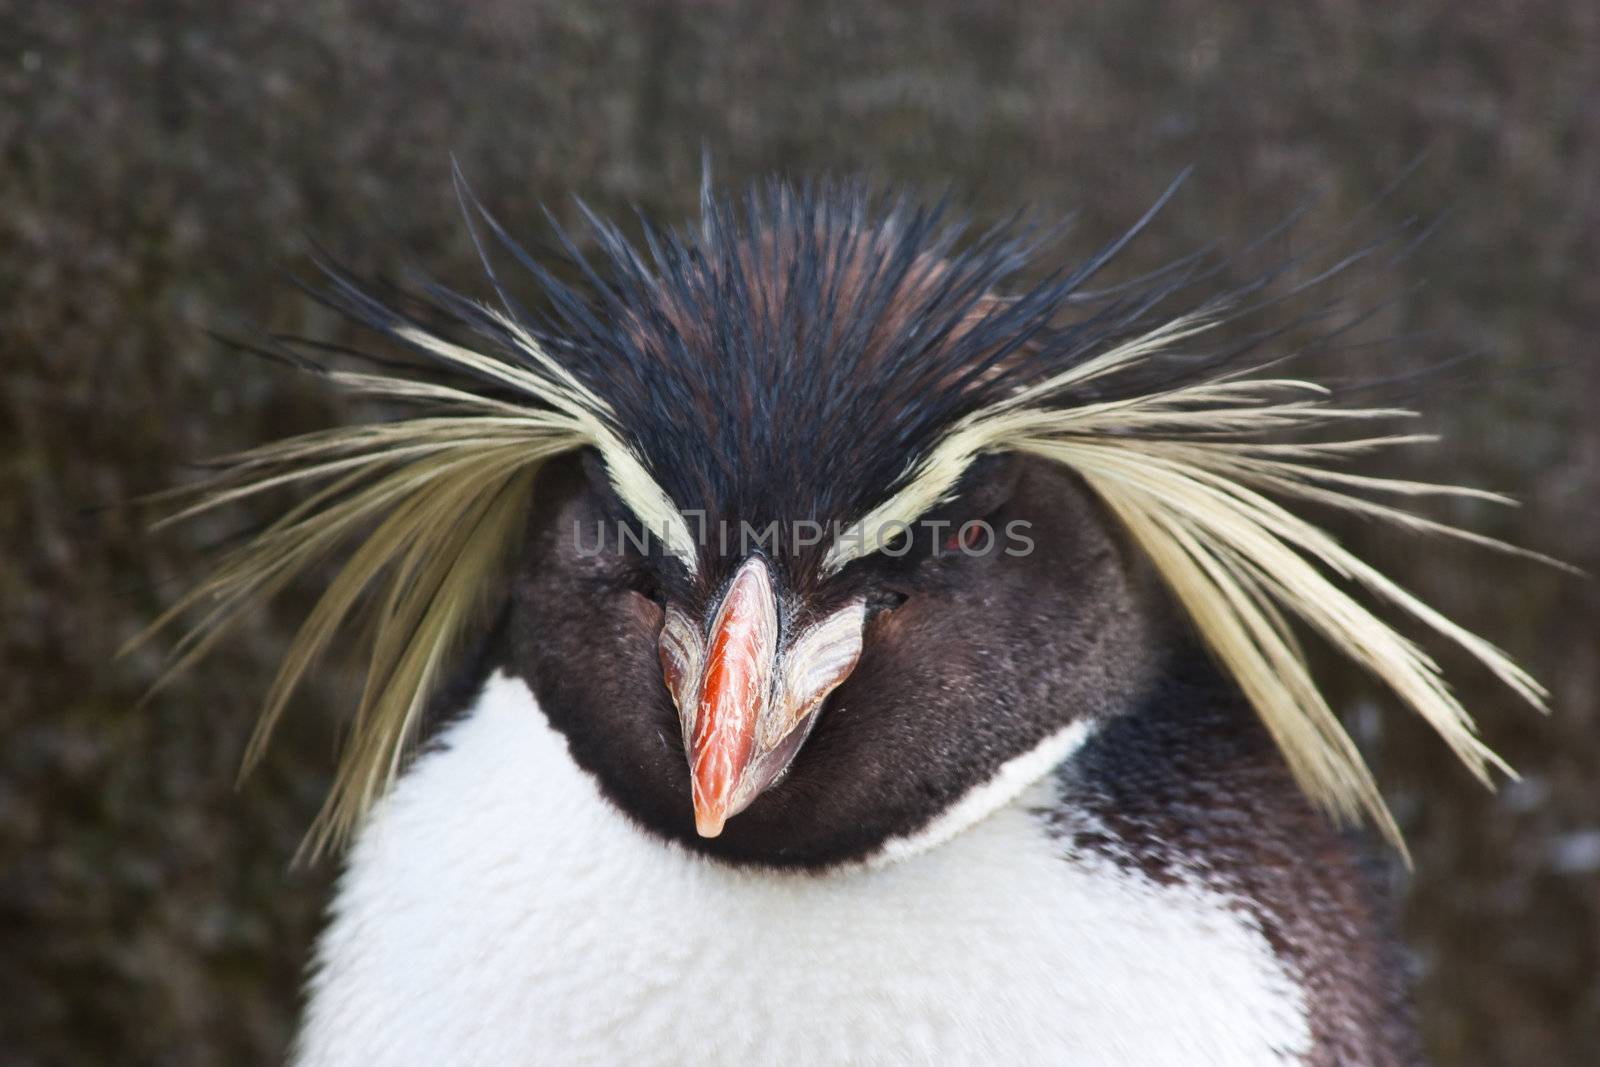 Rockhopper Penguin by Perseomedusa